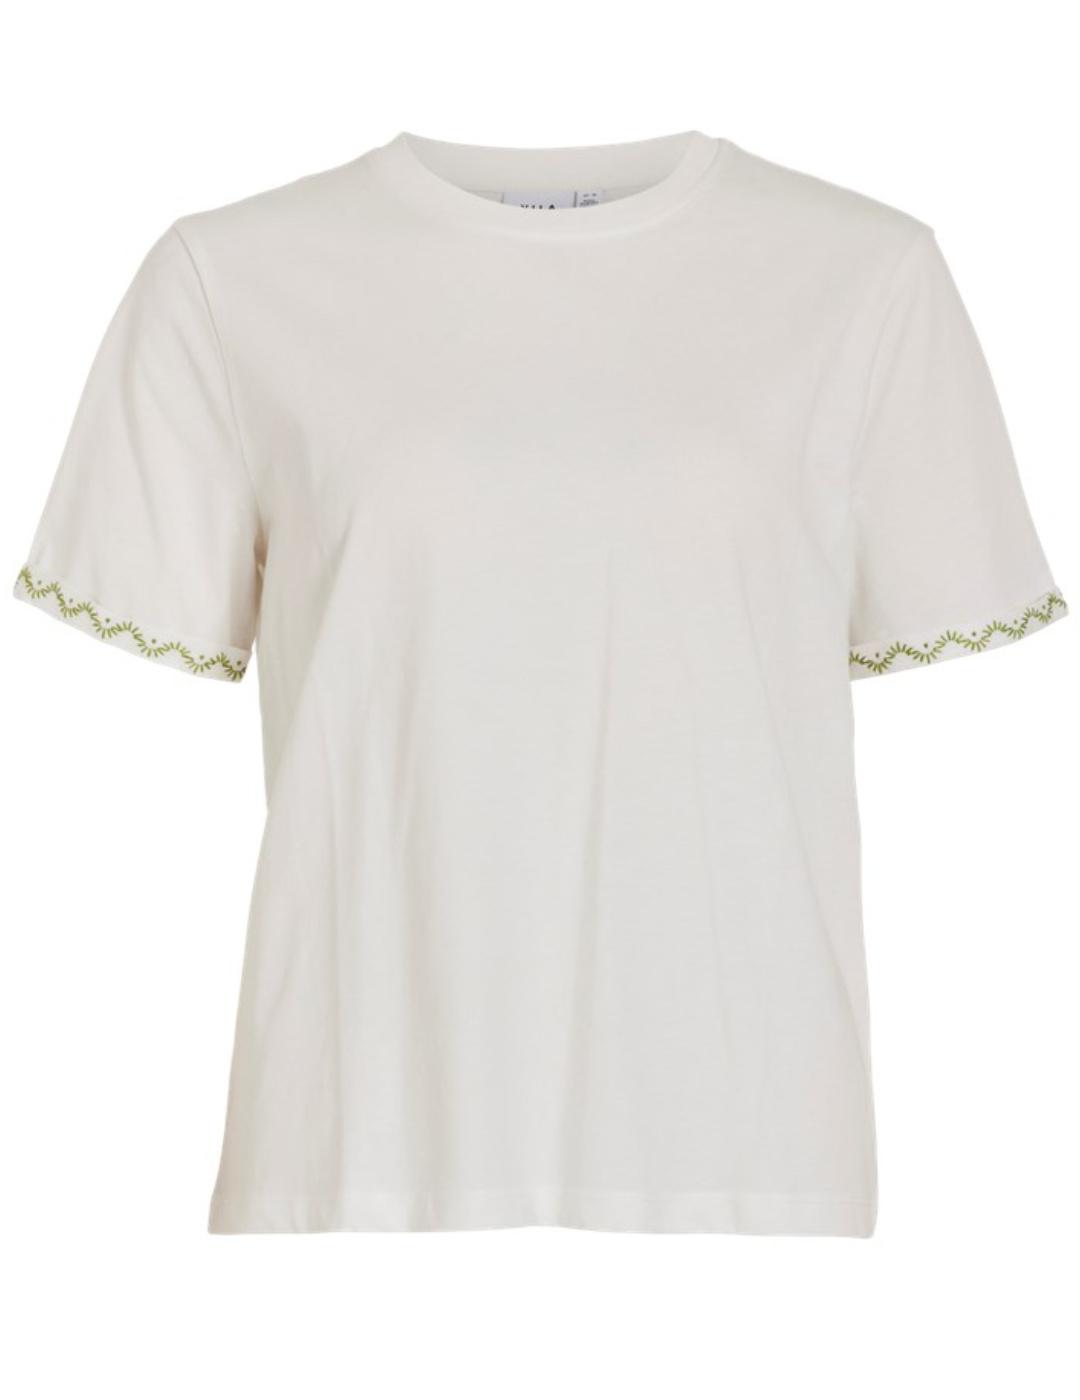 Camiseta Vila Sybil blanca EMB manga corta para mujer